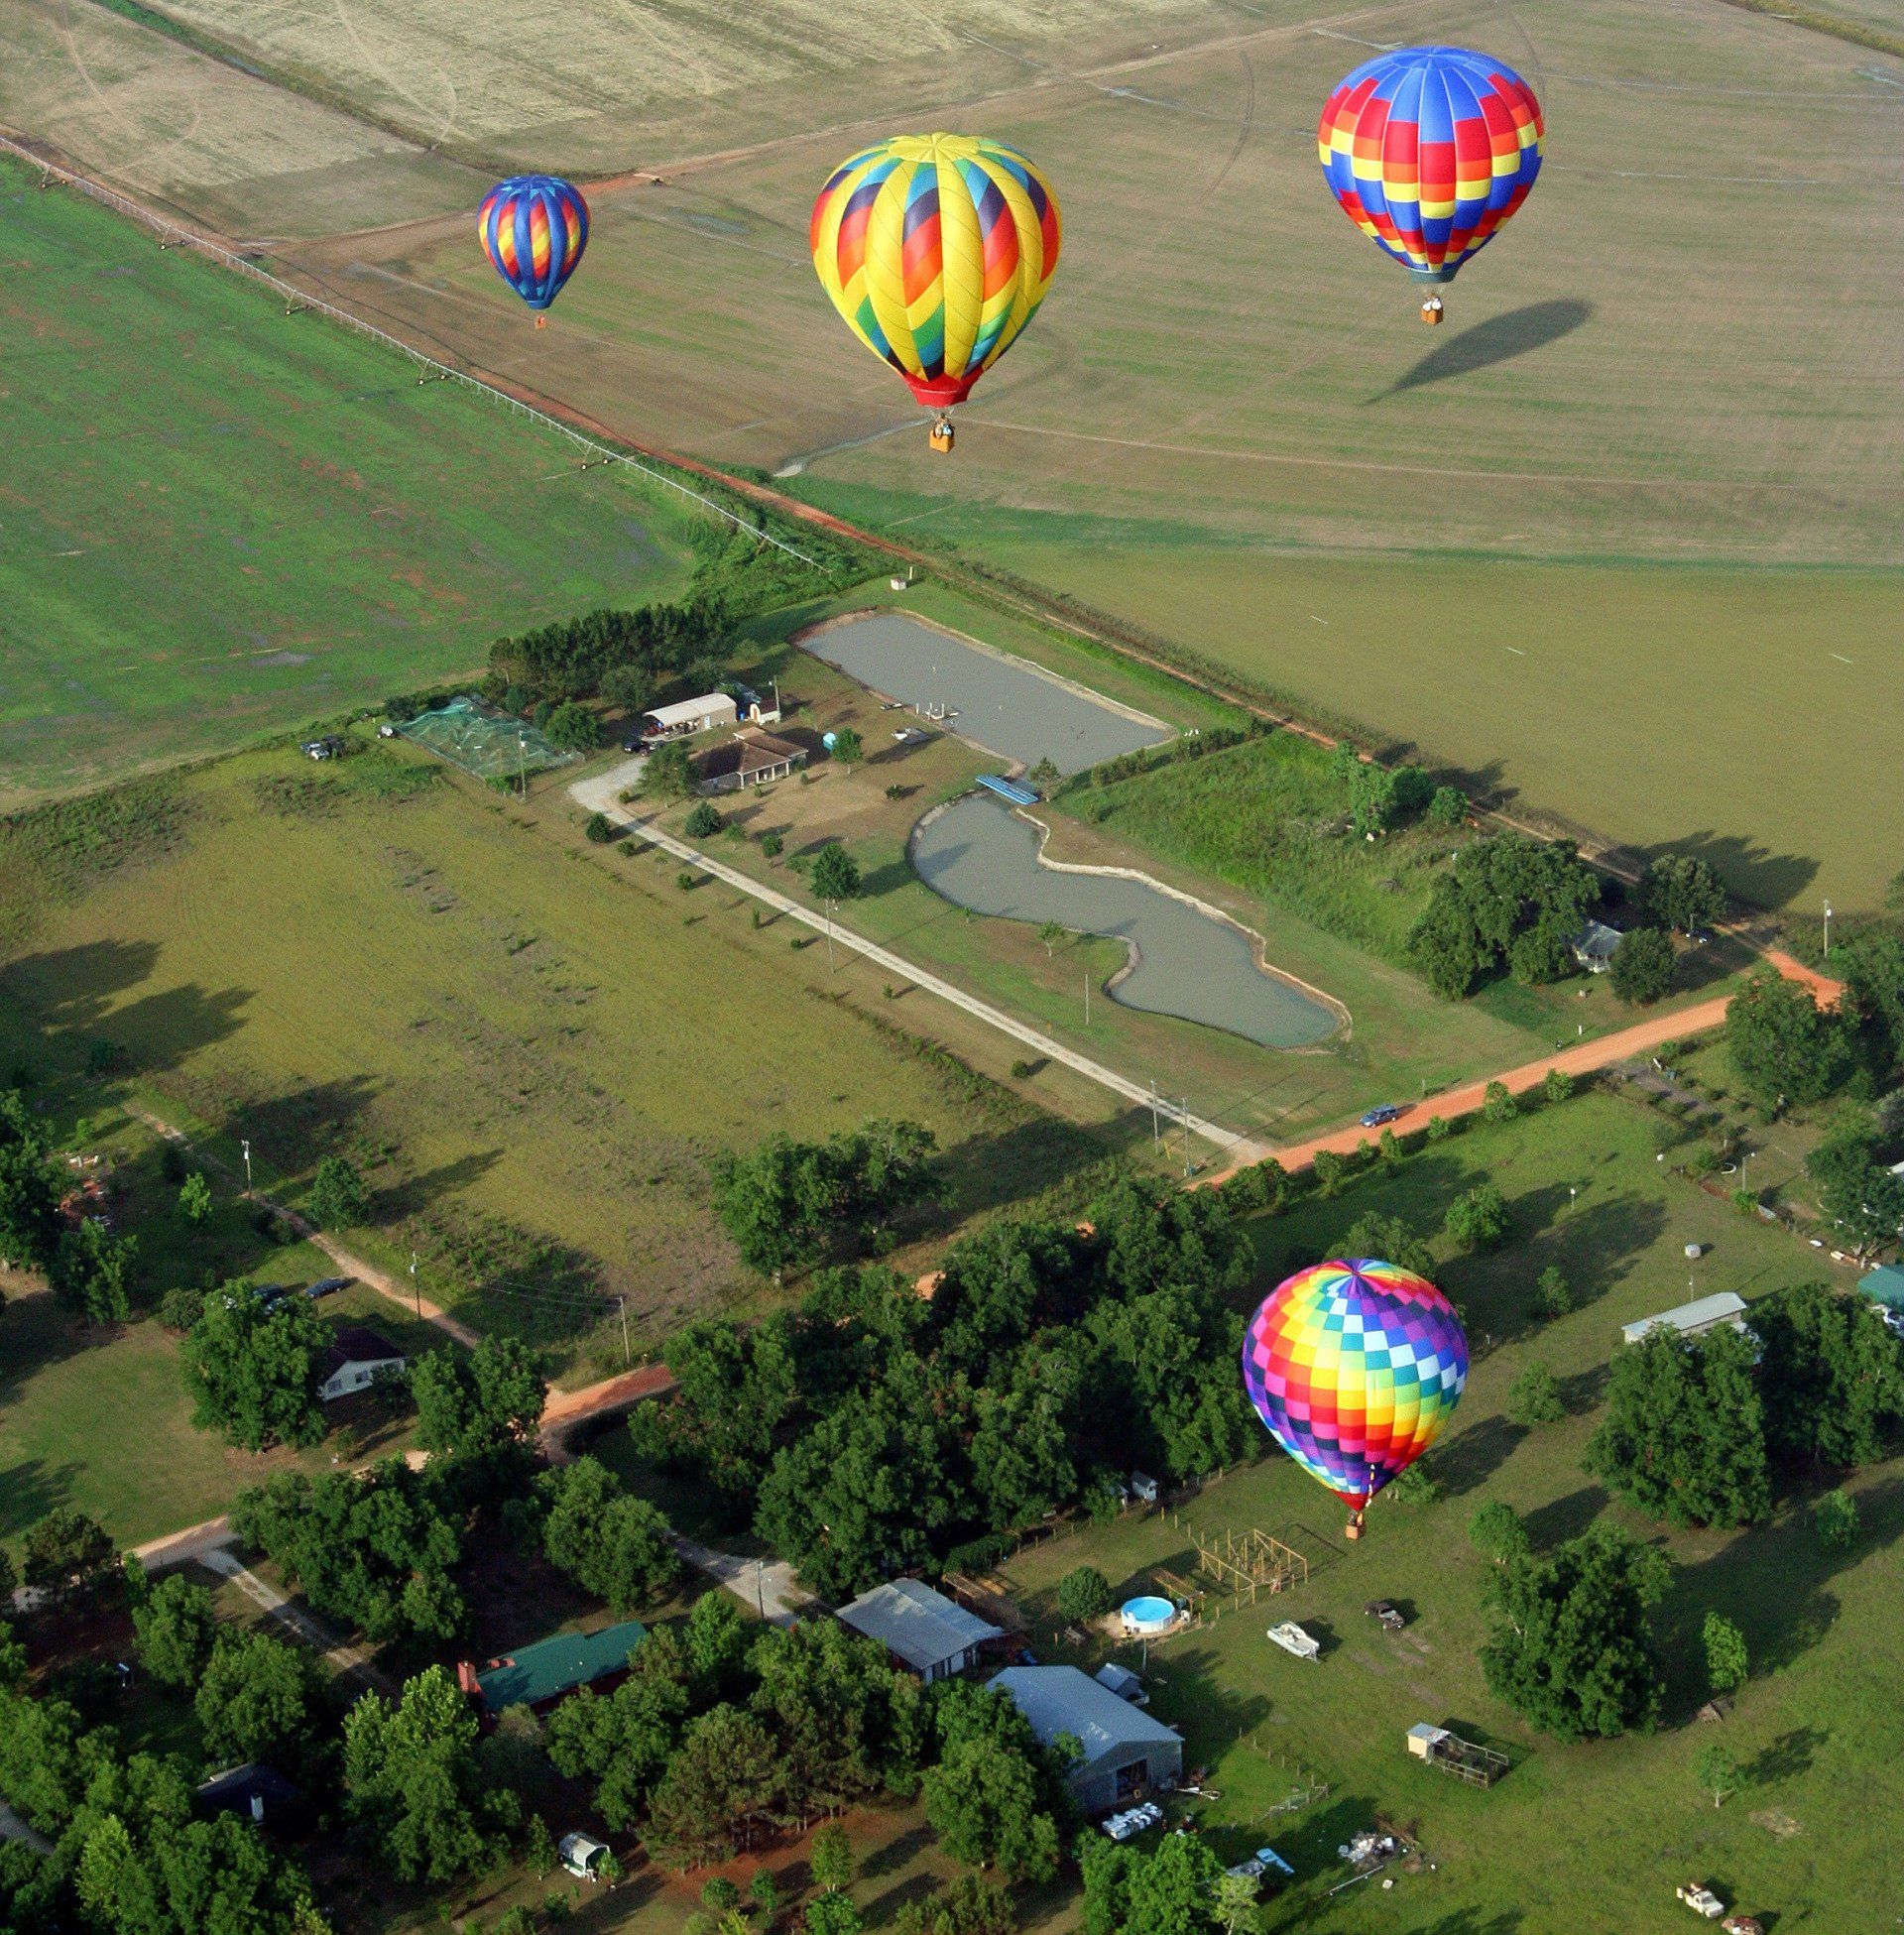 Gulf Coast Hot Air Balloon Festival Lights Up the Skies this week